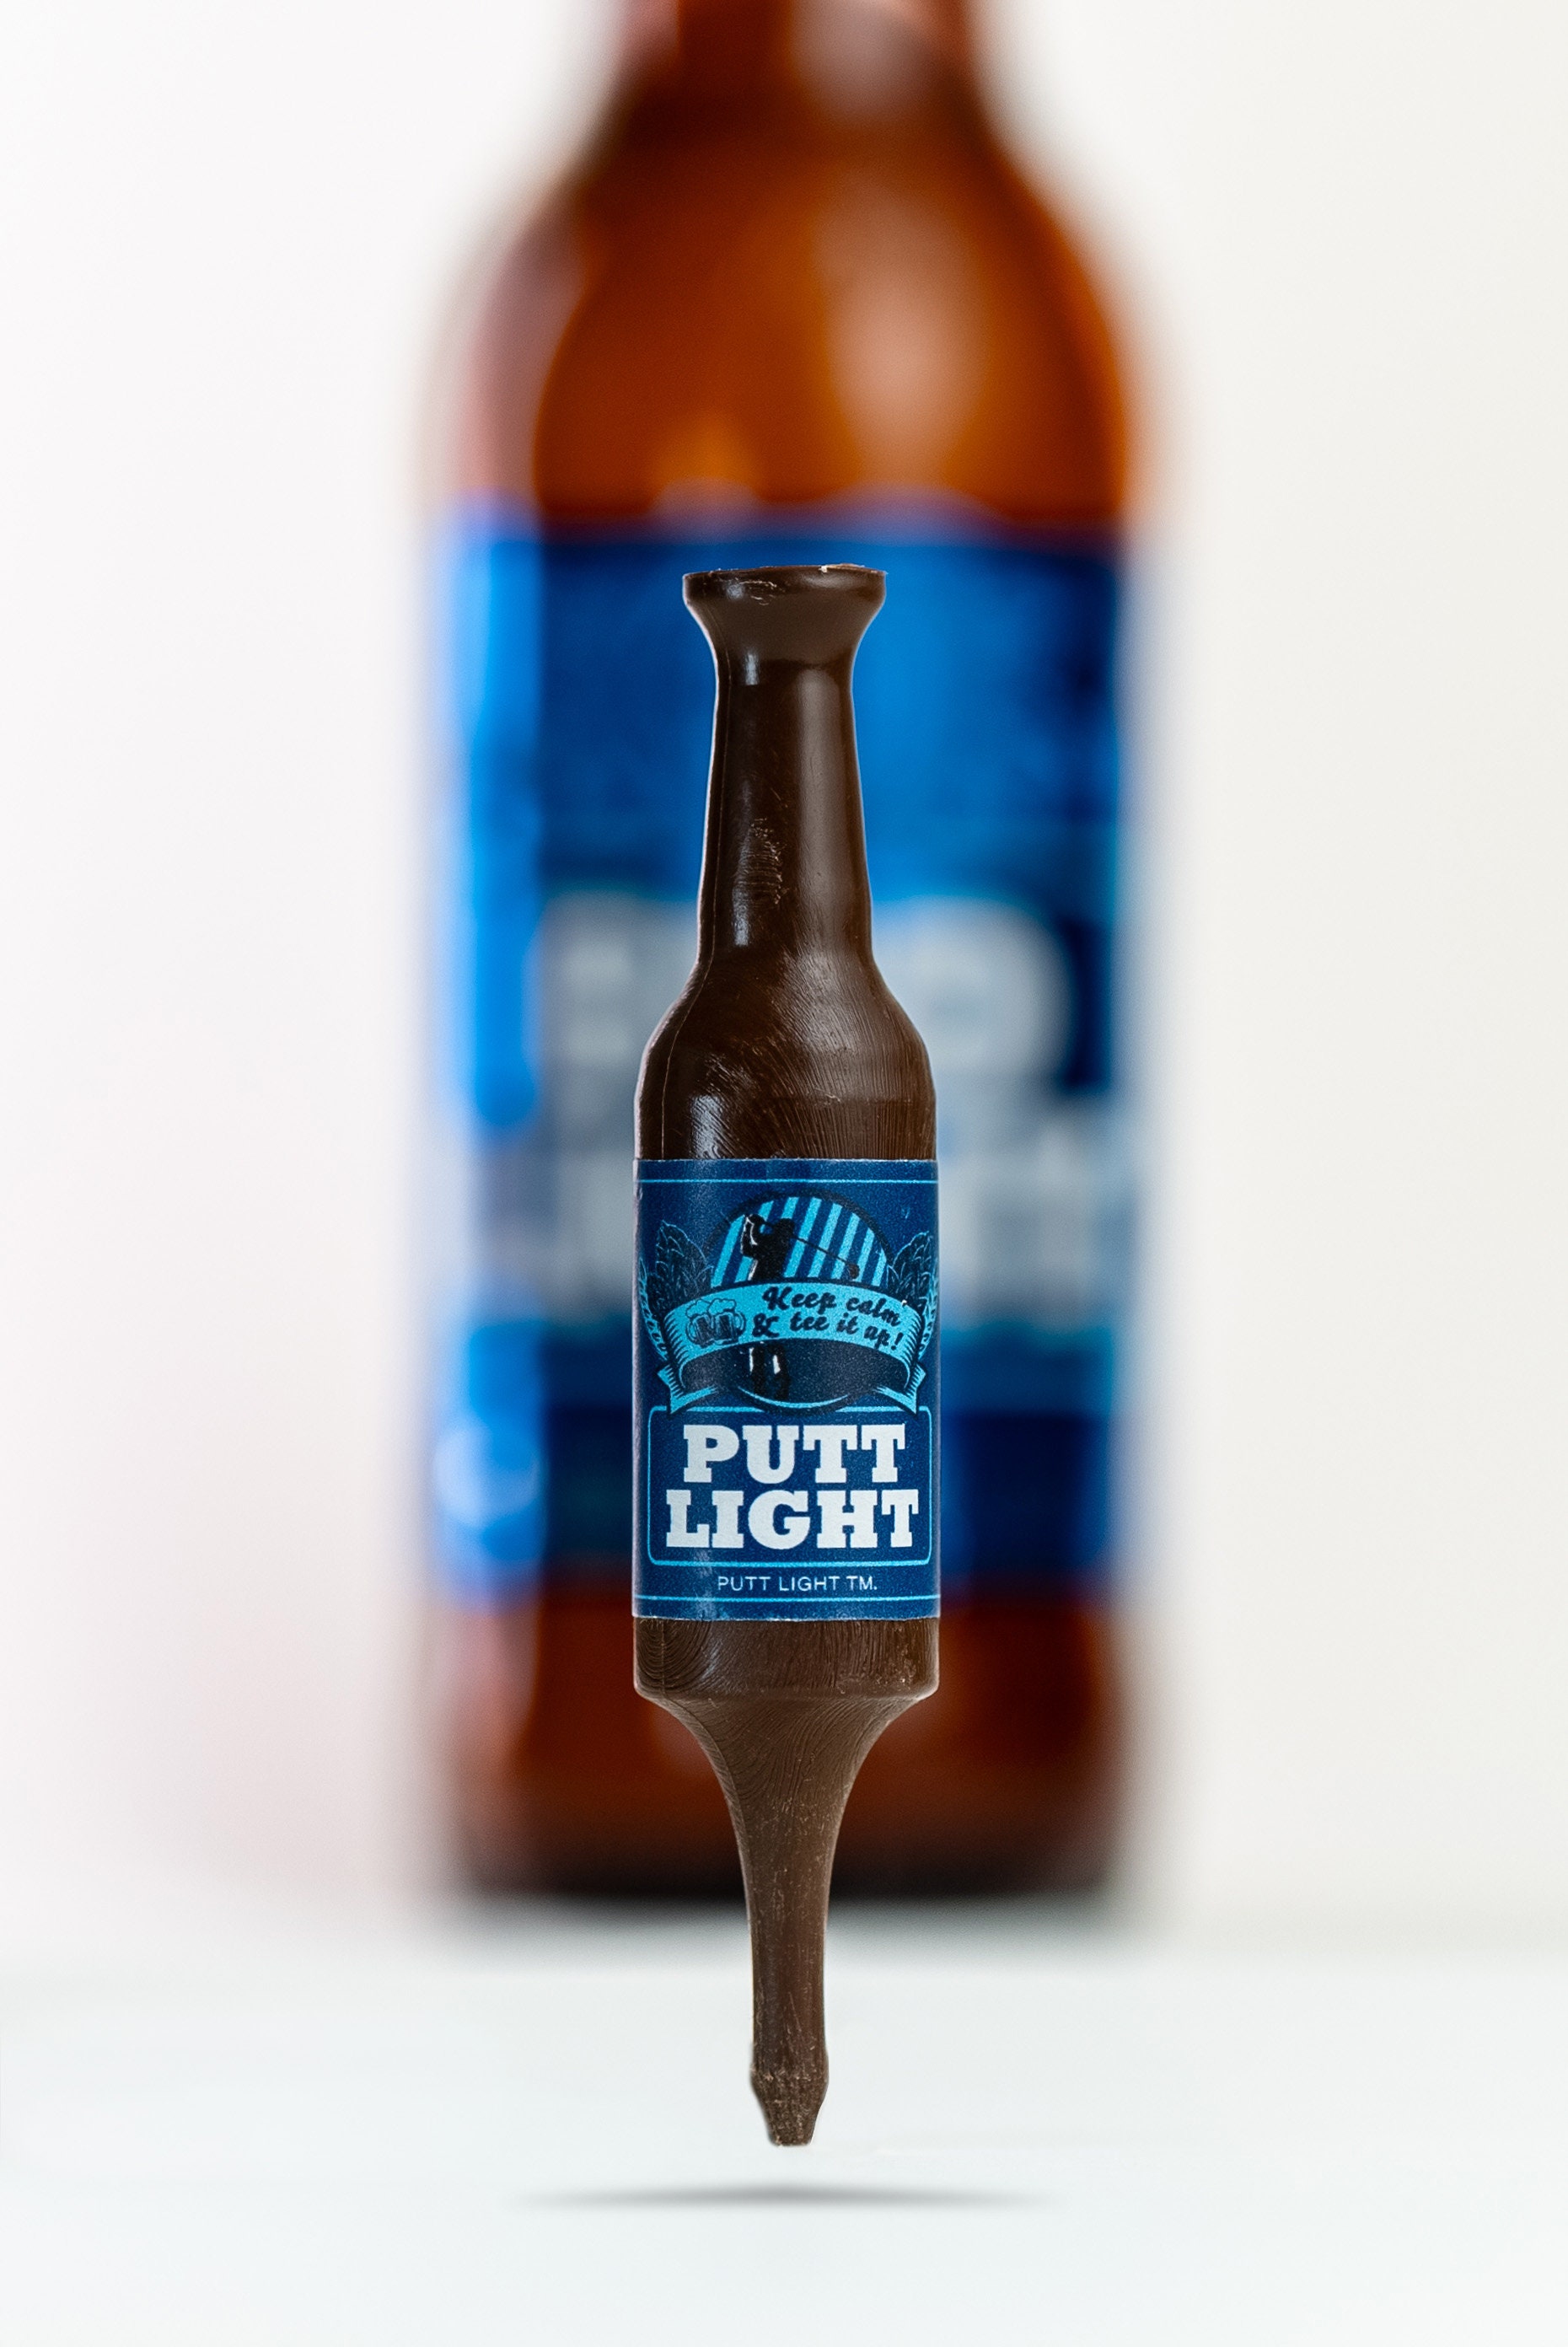 Beer Bottle Golf Tees, Putt Light, Unbreakable Plastic Golf Tees